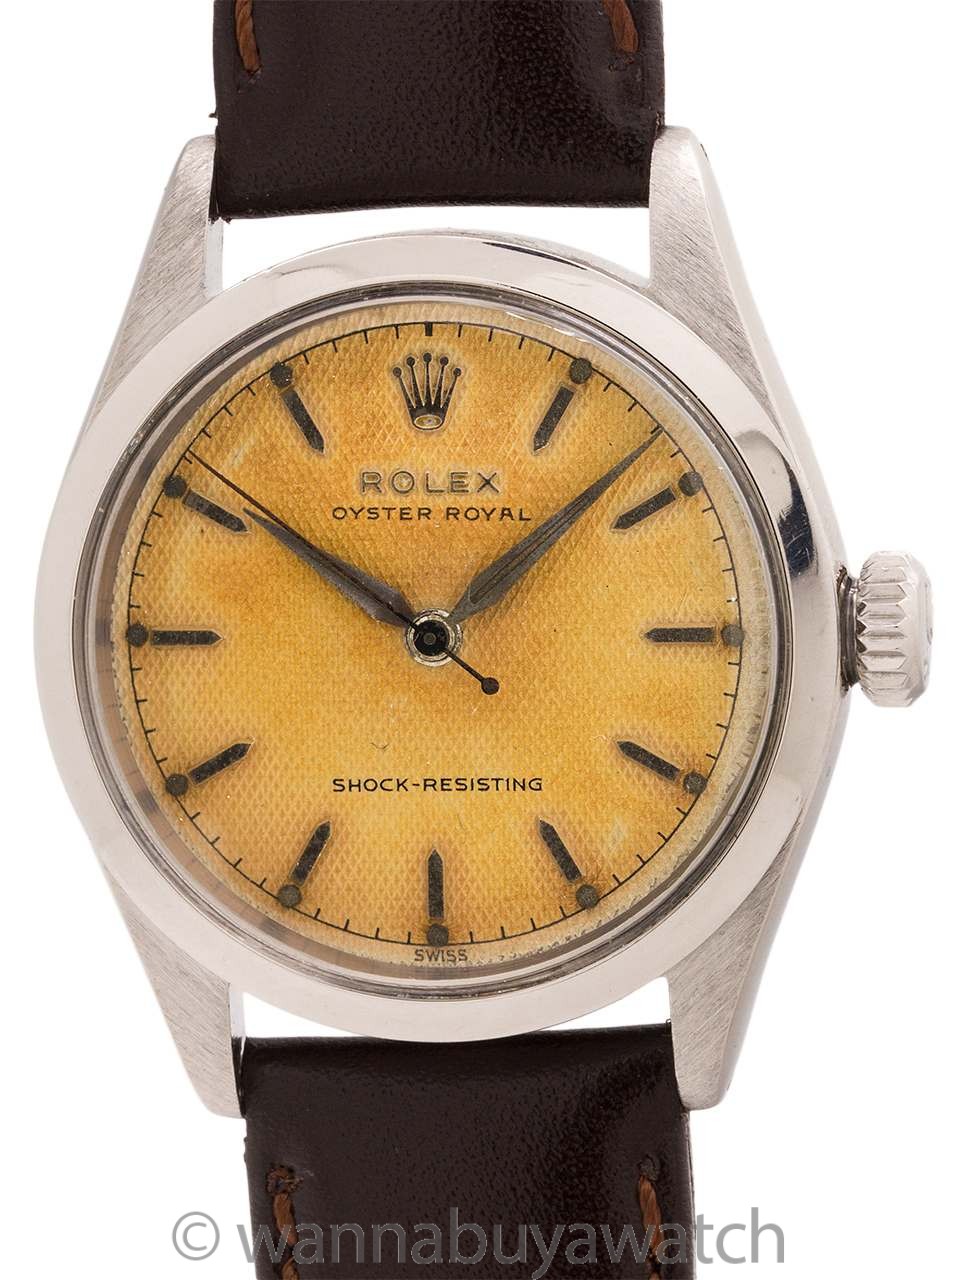 Rolex SS Oyster Royal ref 6244 circa 